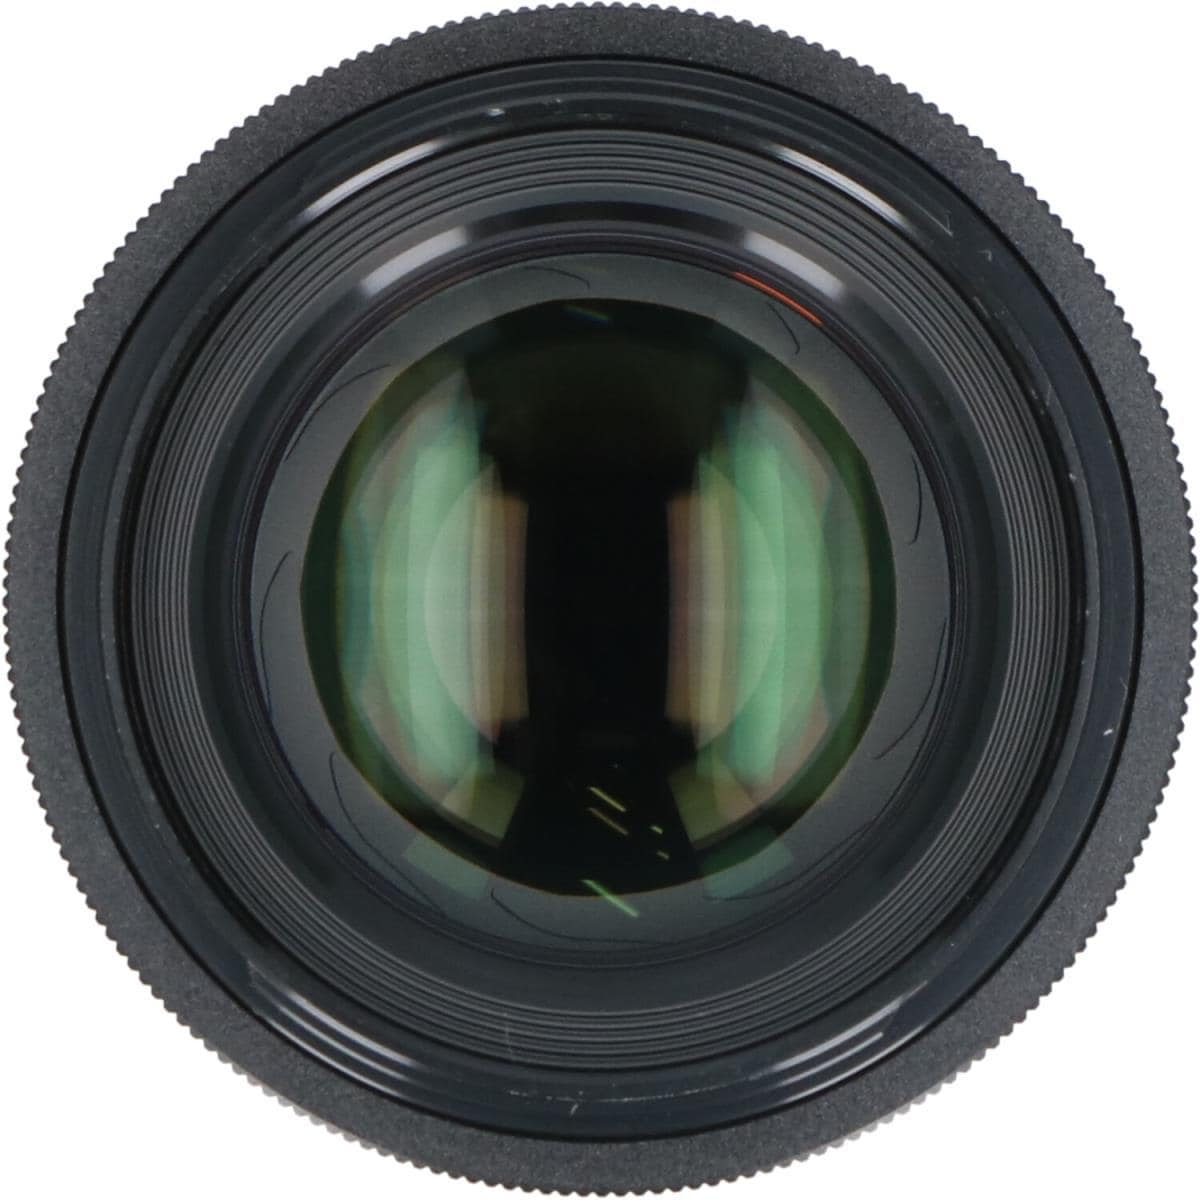 KOMEHYO |TOKINA ATX-M 56mm f/1.4 E|Tokina|相机|可更换镜头|自动对焦